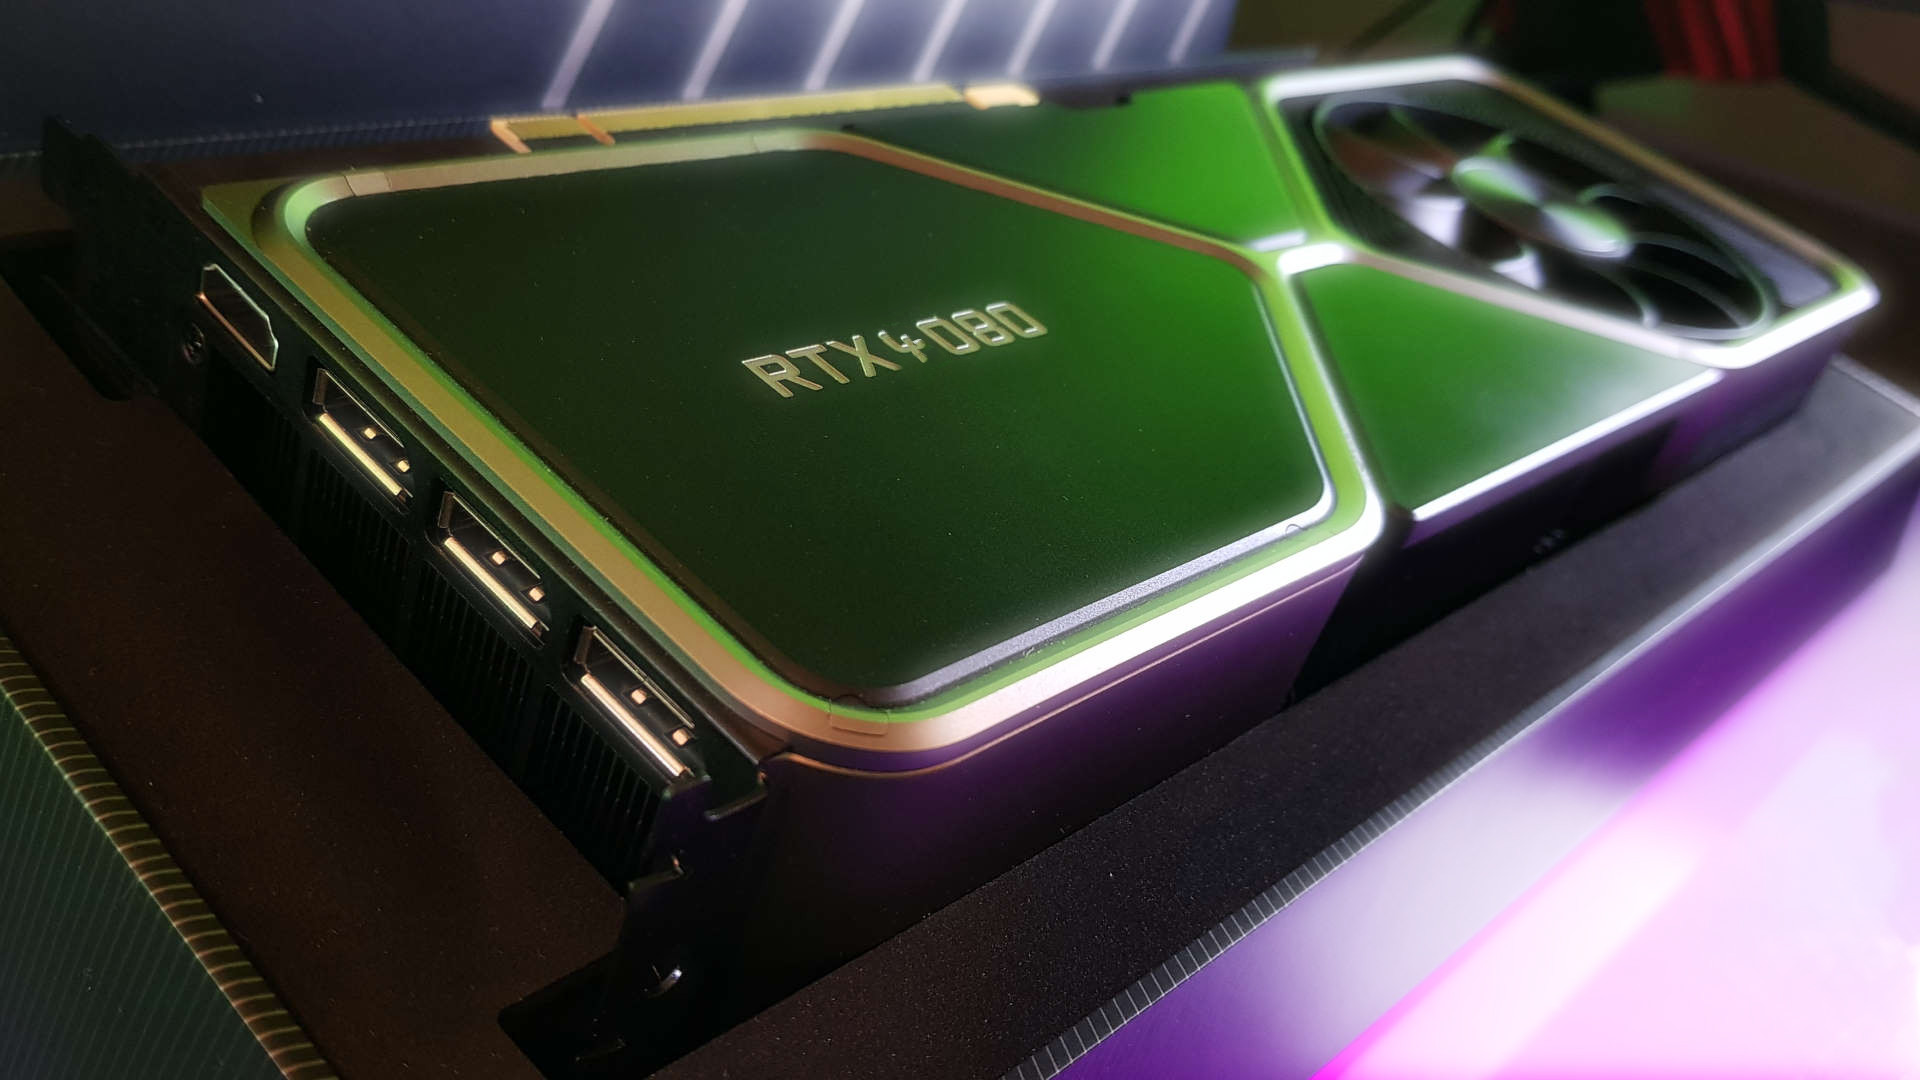 Intel divulga hardware recomendado para suas GPUs - Pichau Arena